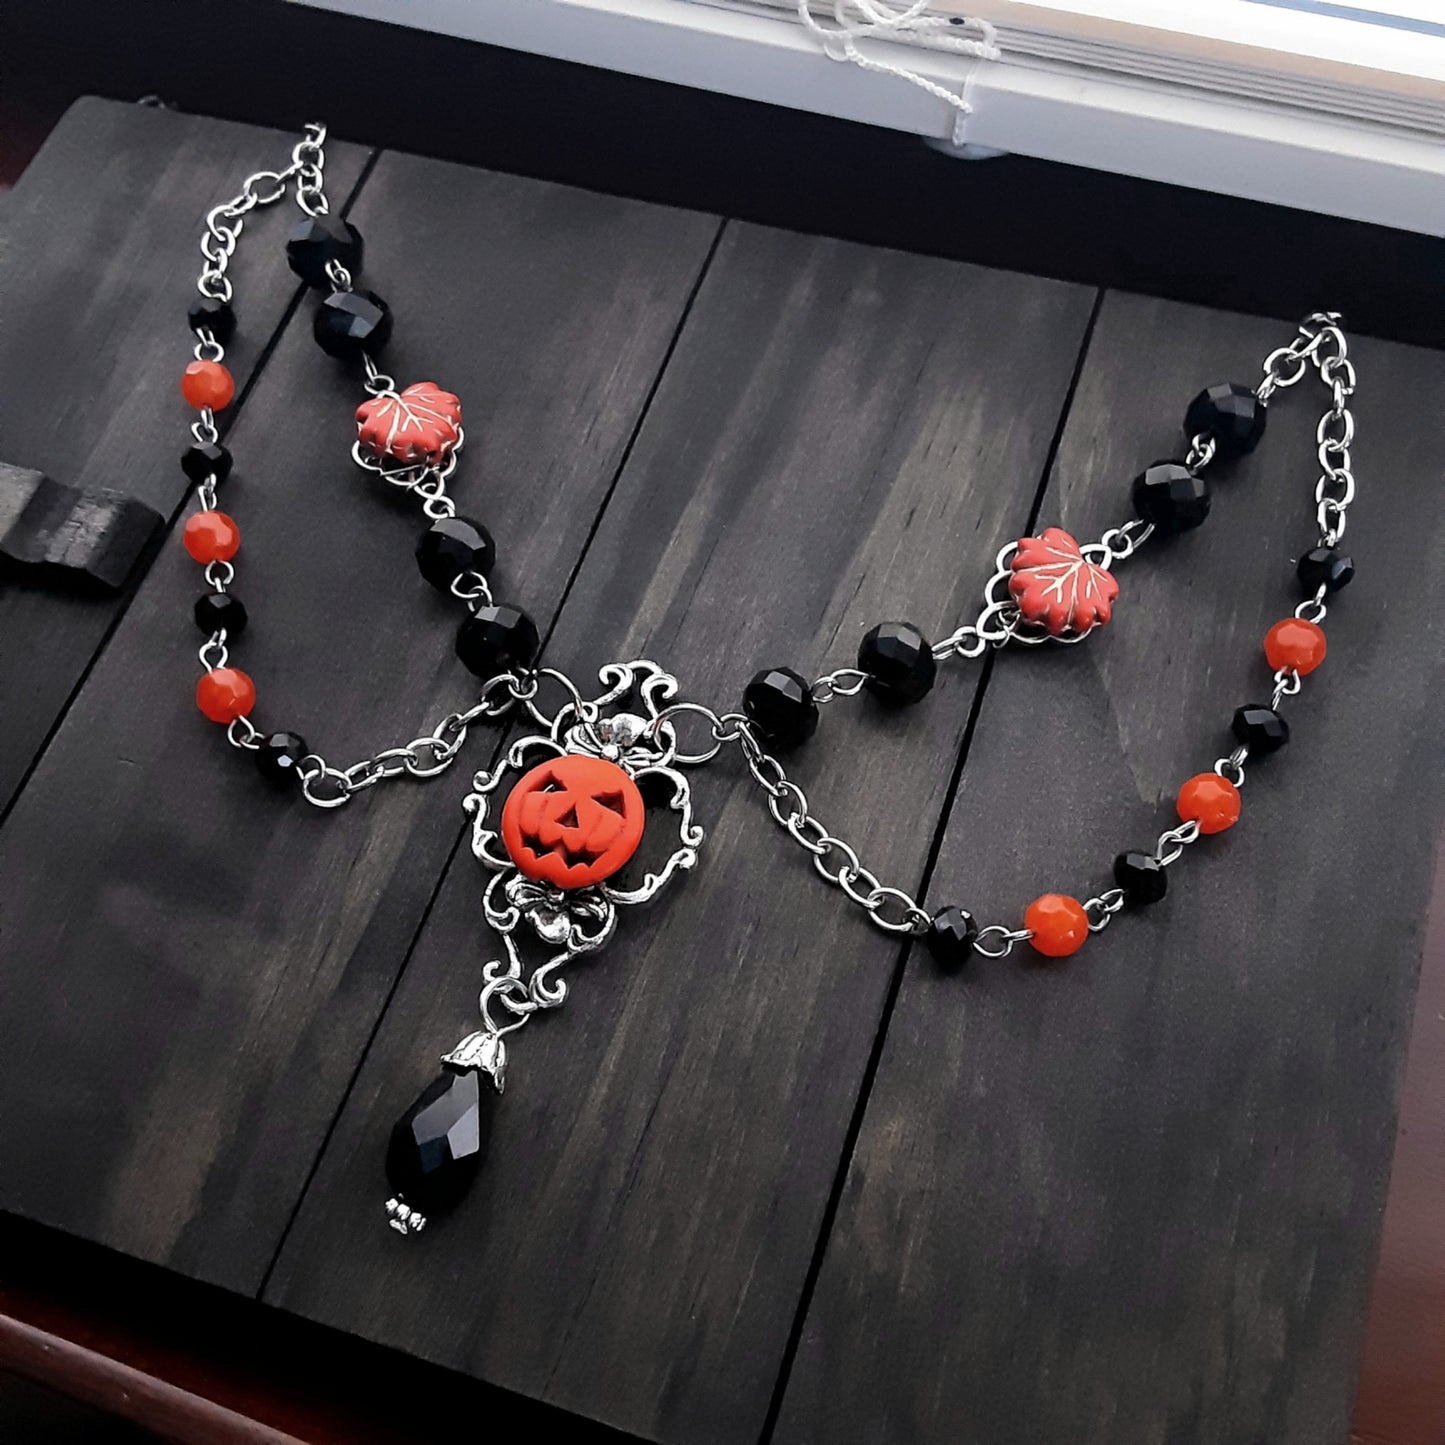 Jack O Lantern choker necklace Plus size adjustable Pumpkin necklace Orange and black beaded Gothic choker necklace